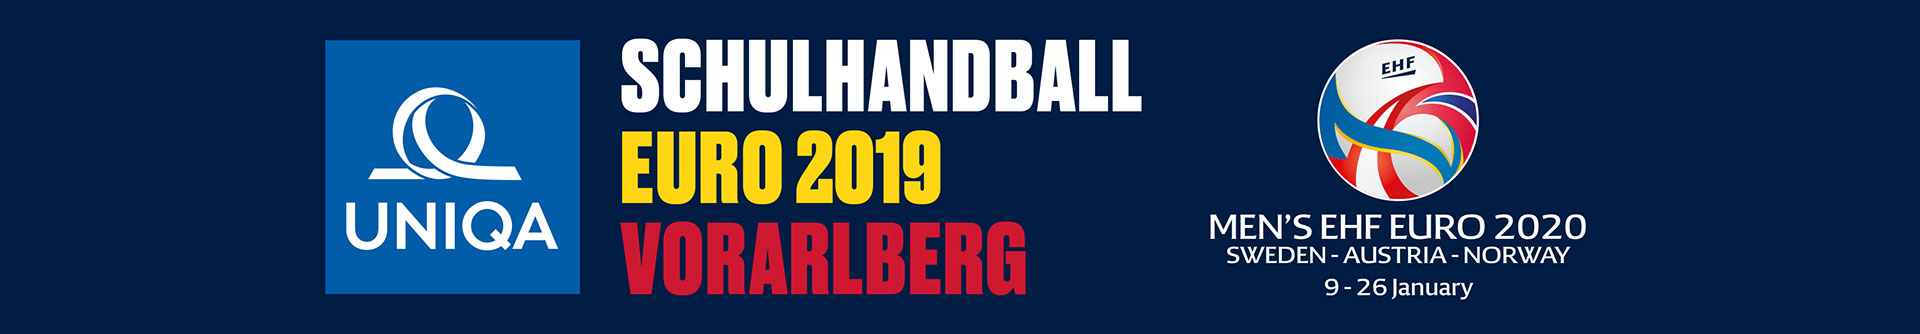 Schulhandball Euro 2019 Vorarlberg